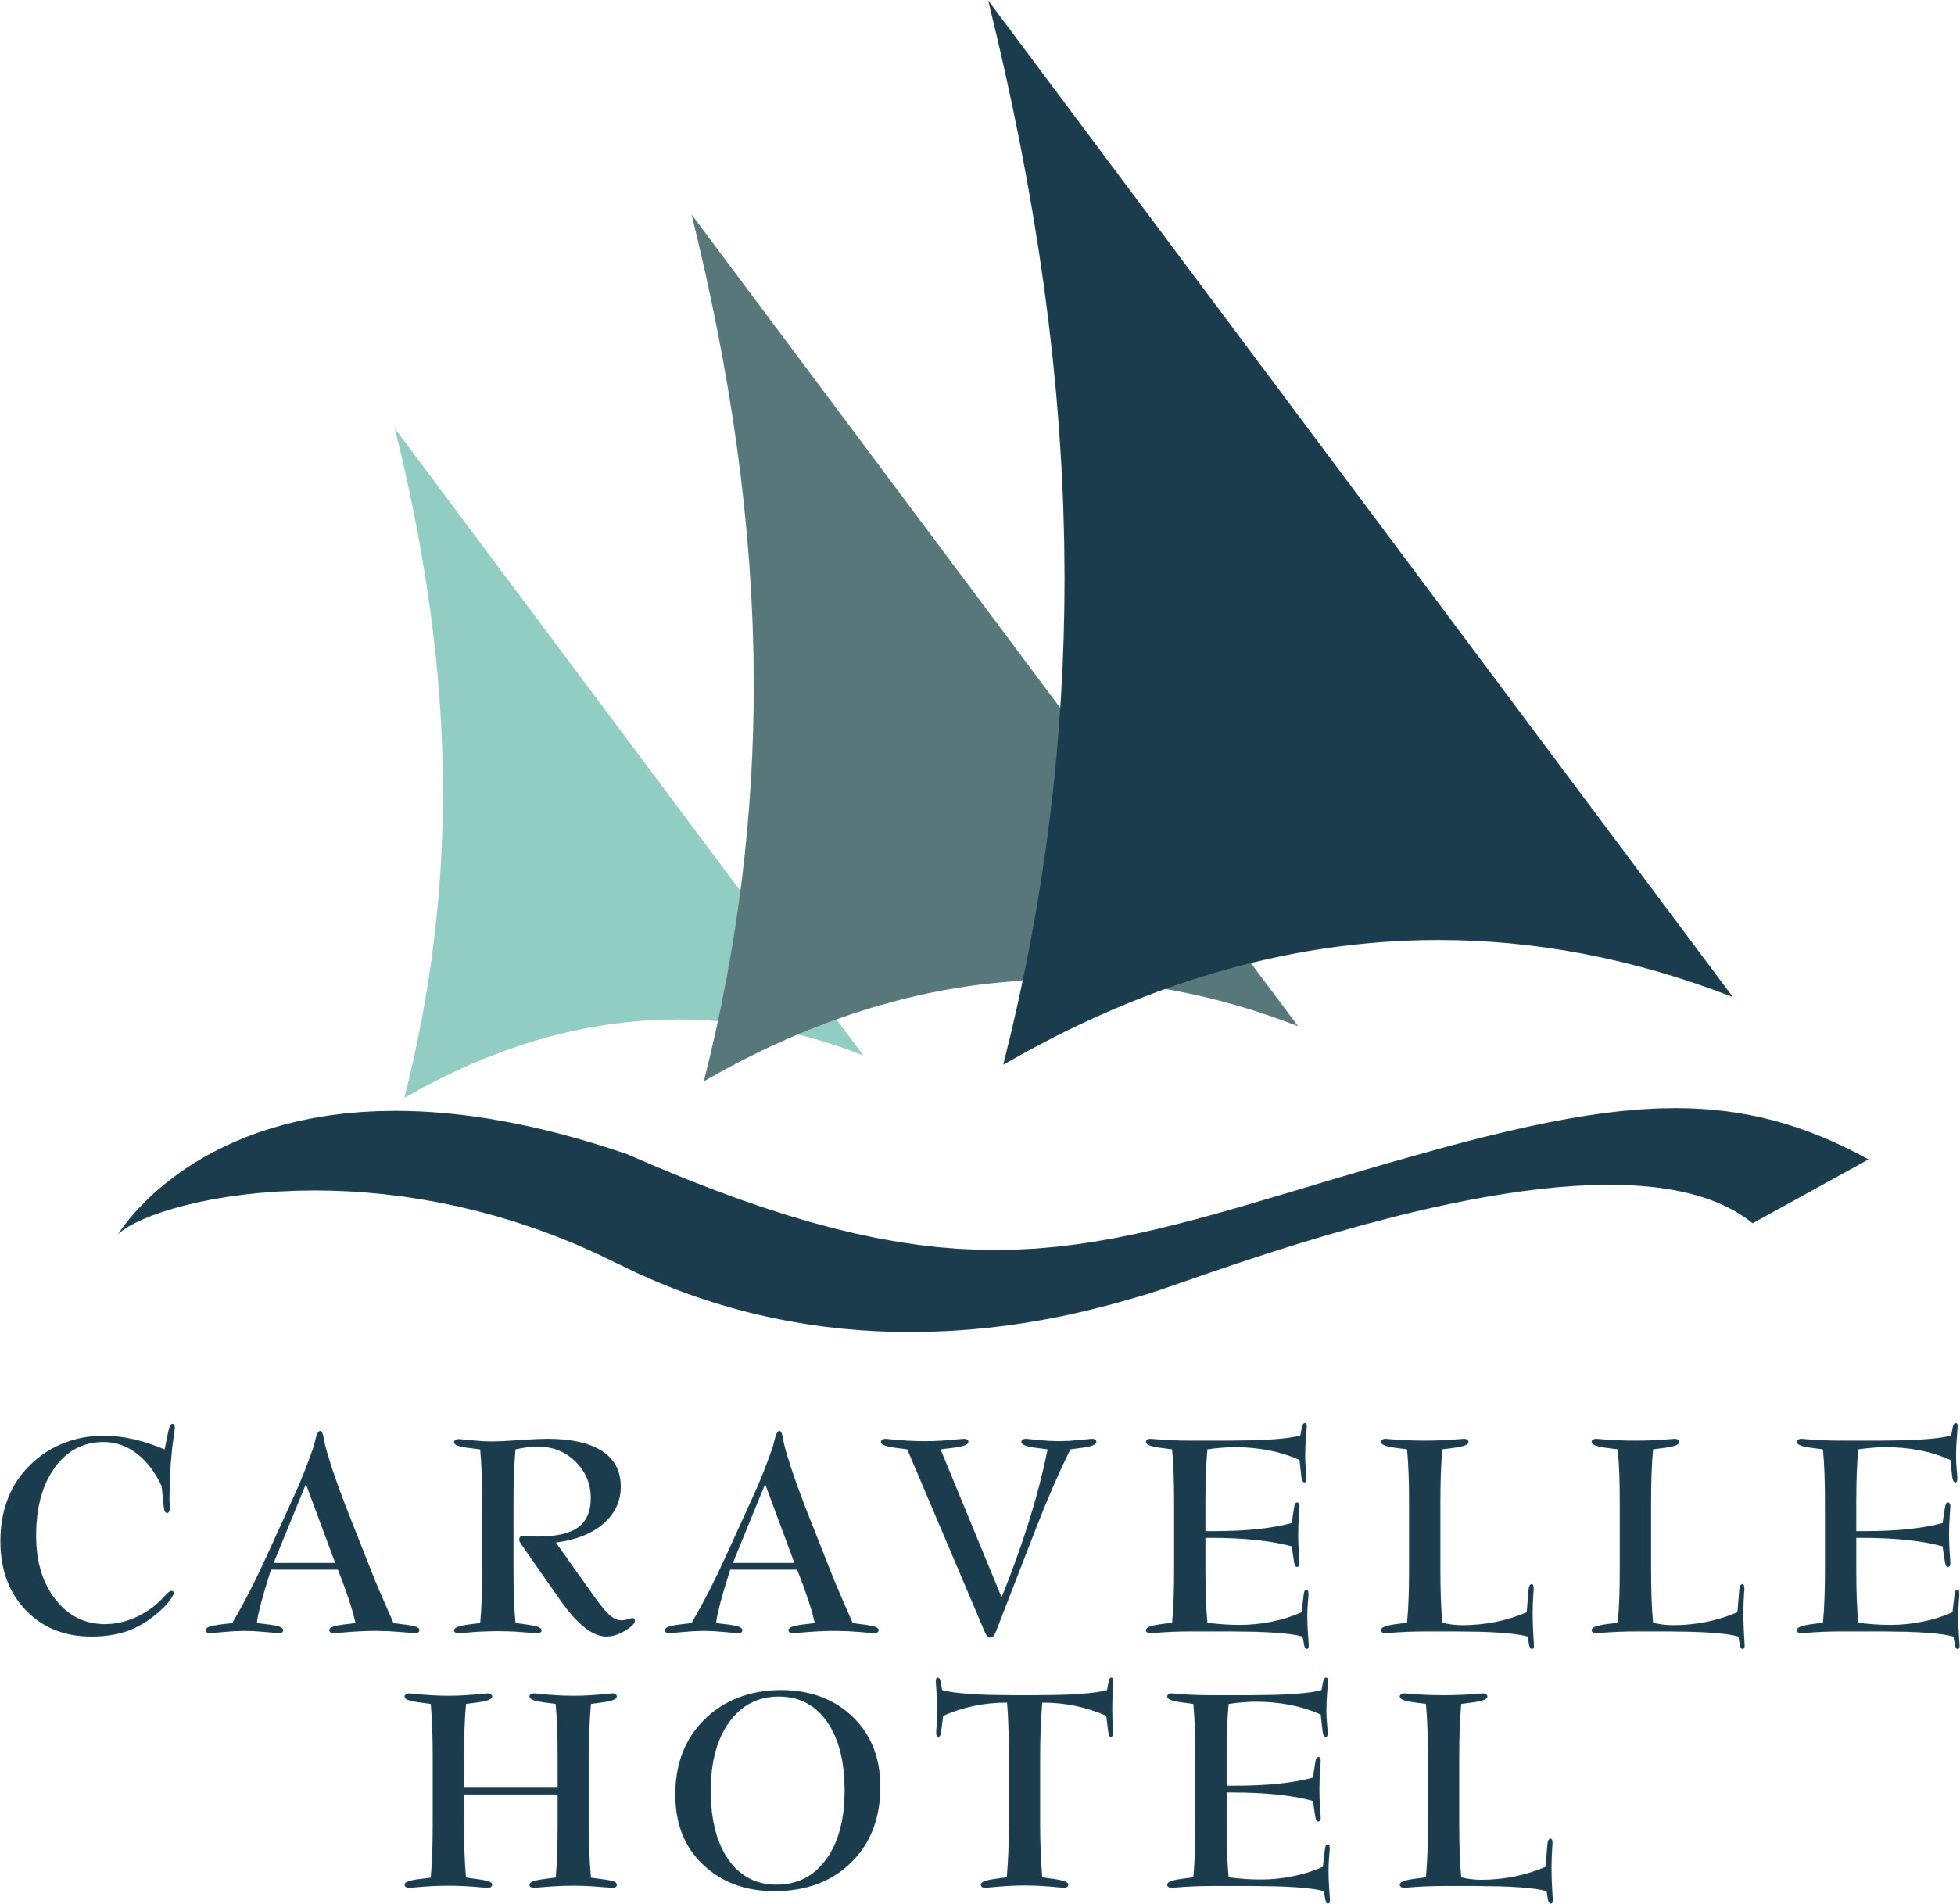 Caravelle Hotel Logo